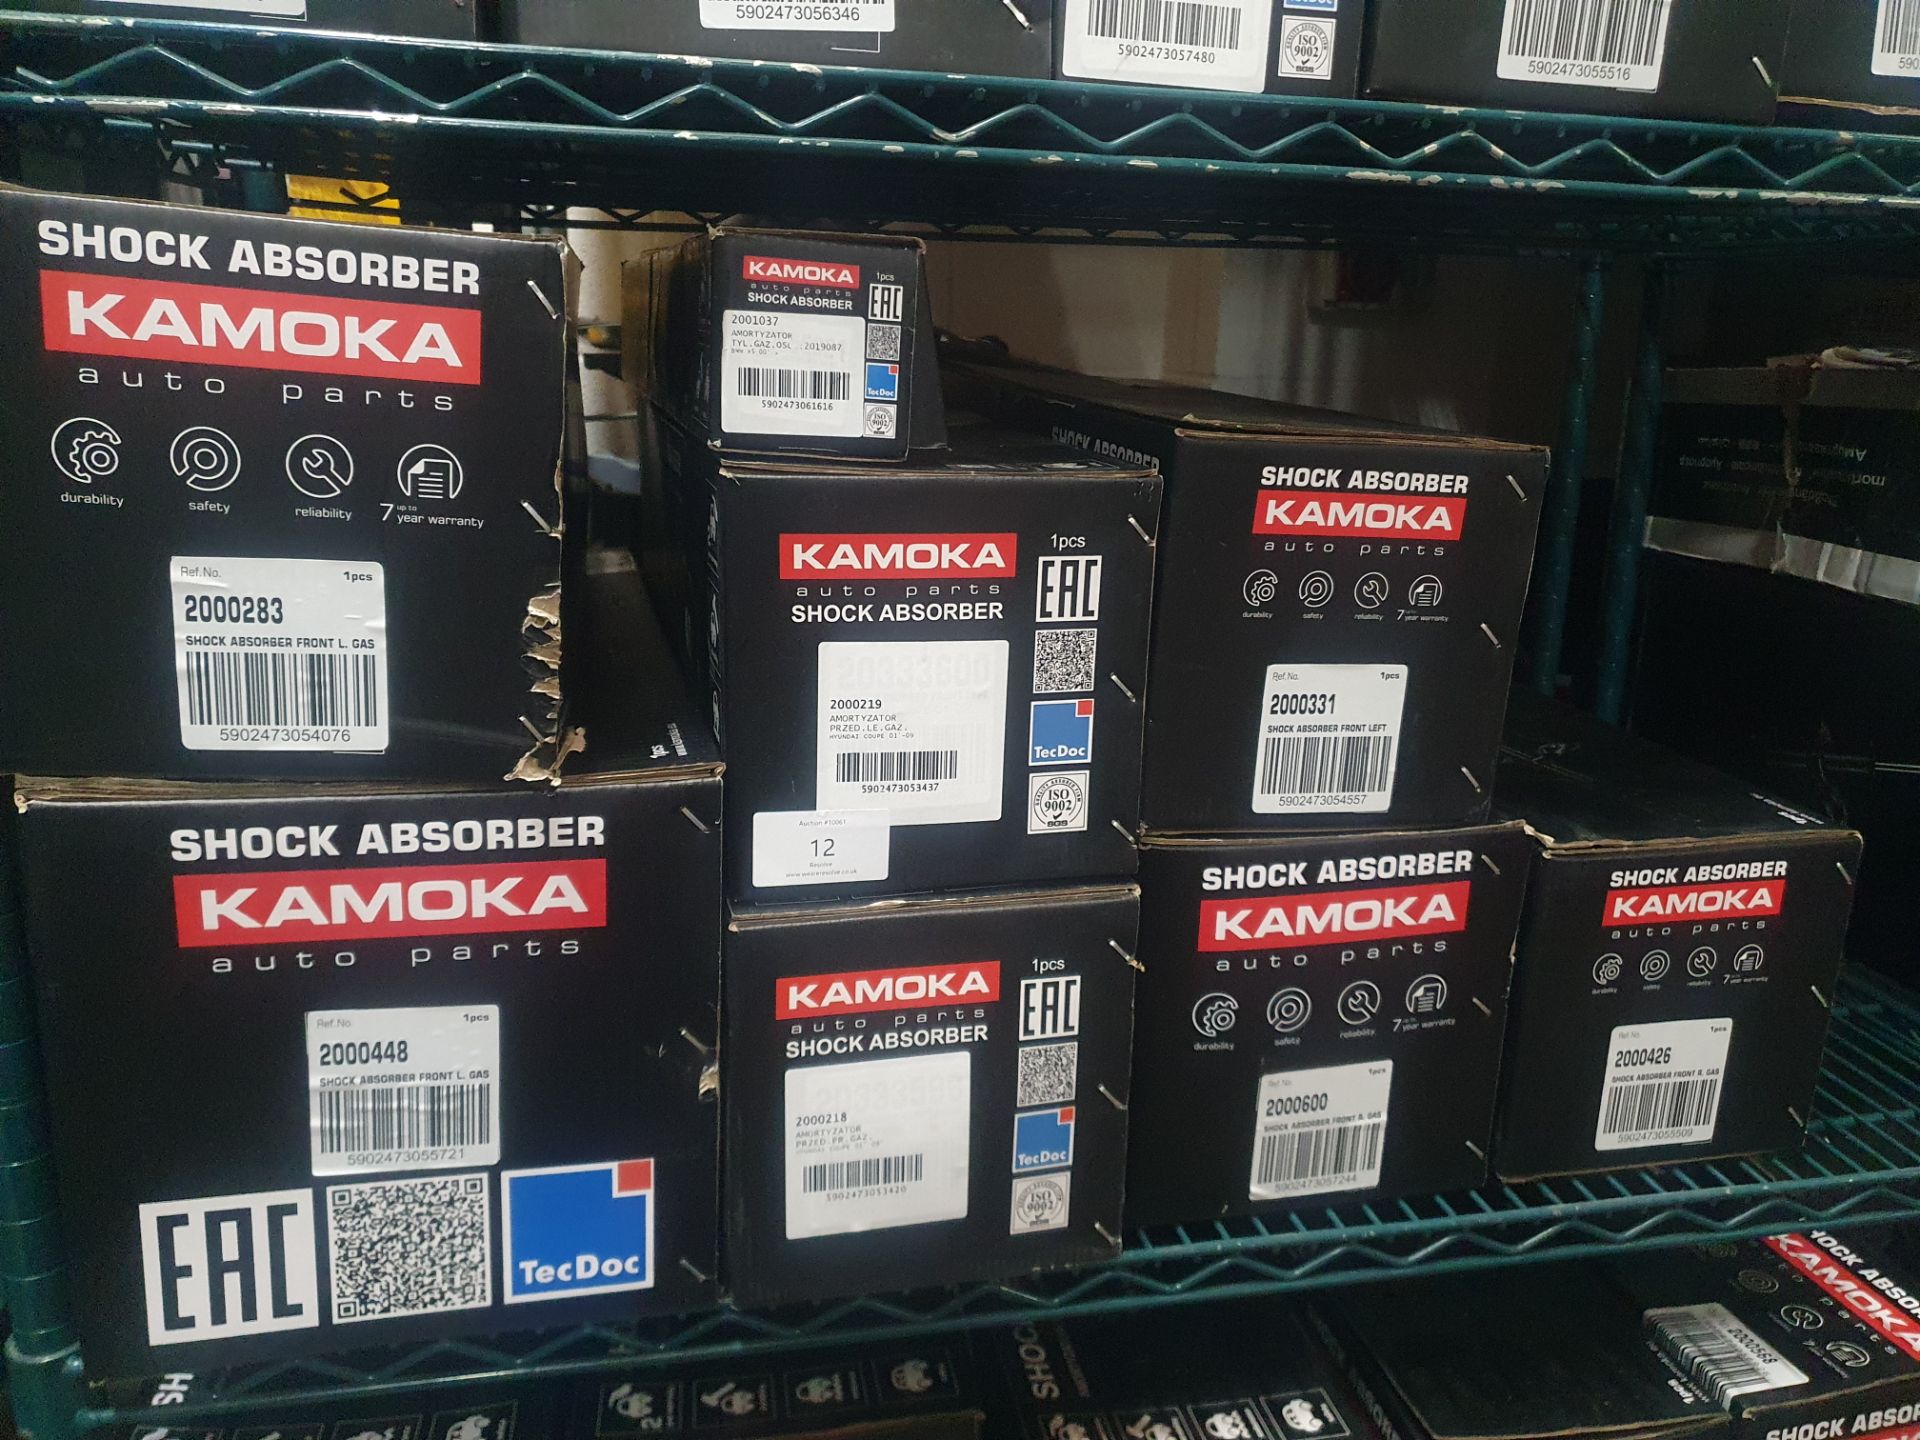 8 x Kamoka shock absorber assorted